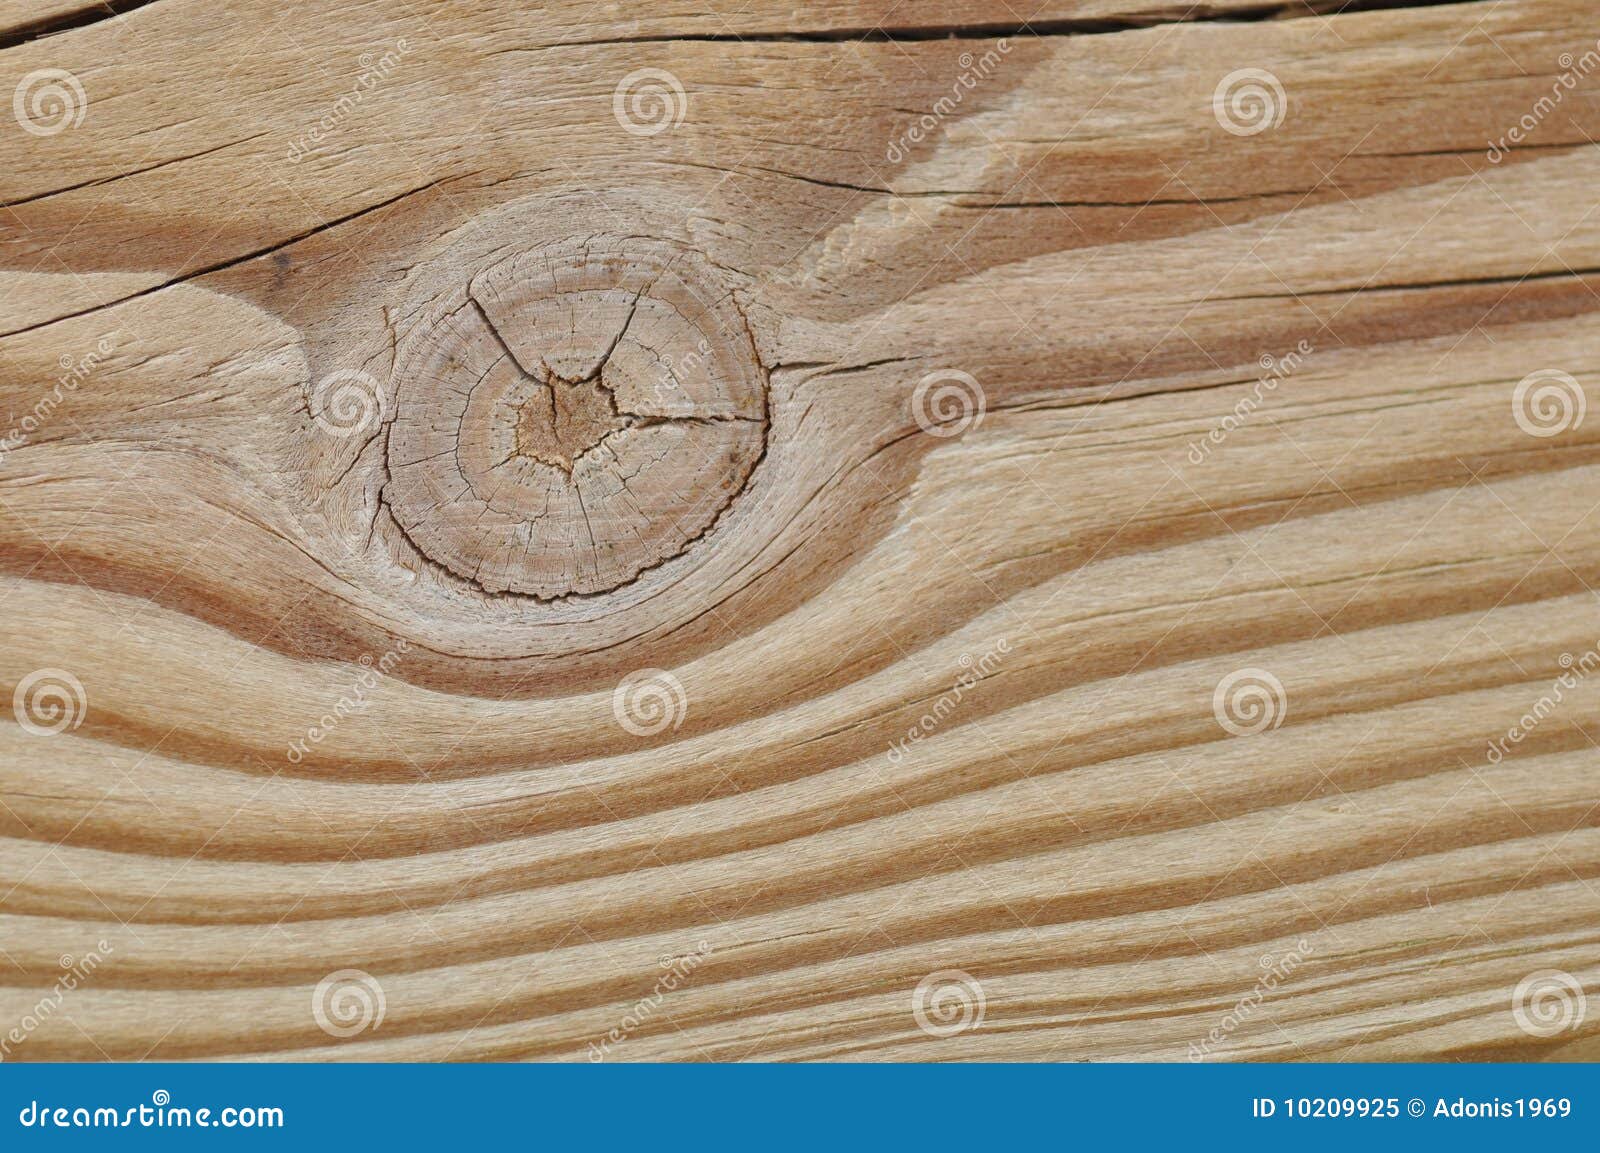 nodo-legno-10209925.jpg